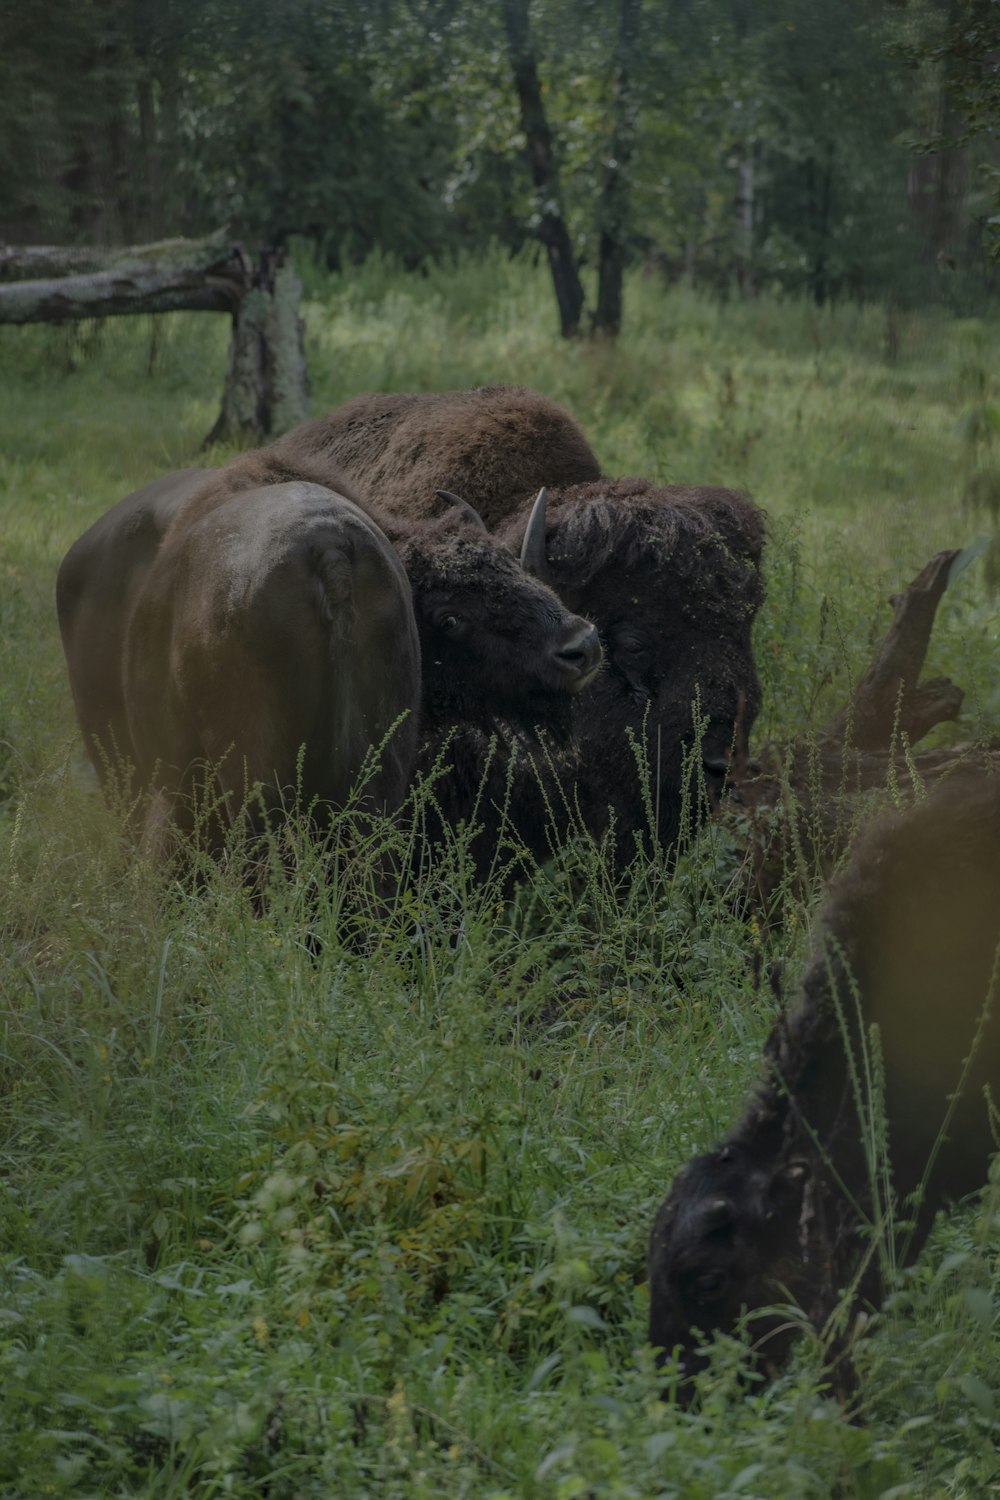 a herd of buffalo grazing on a lush green field